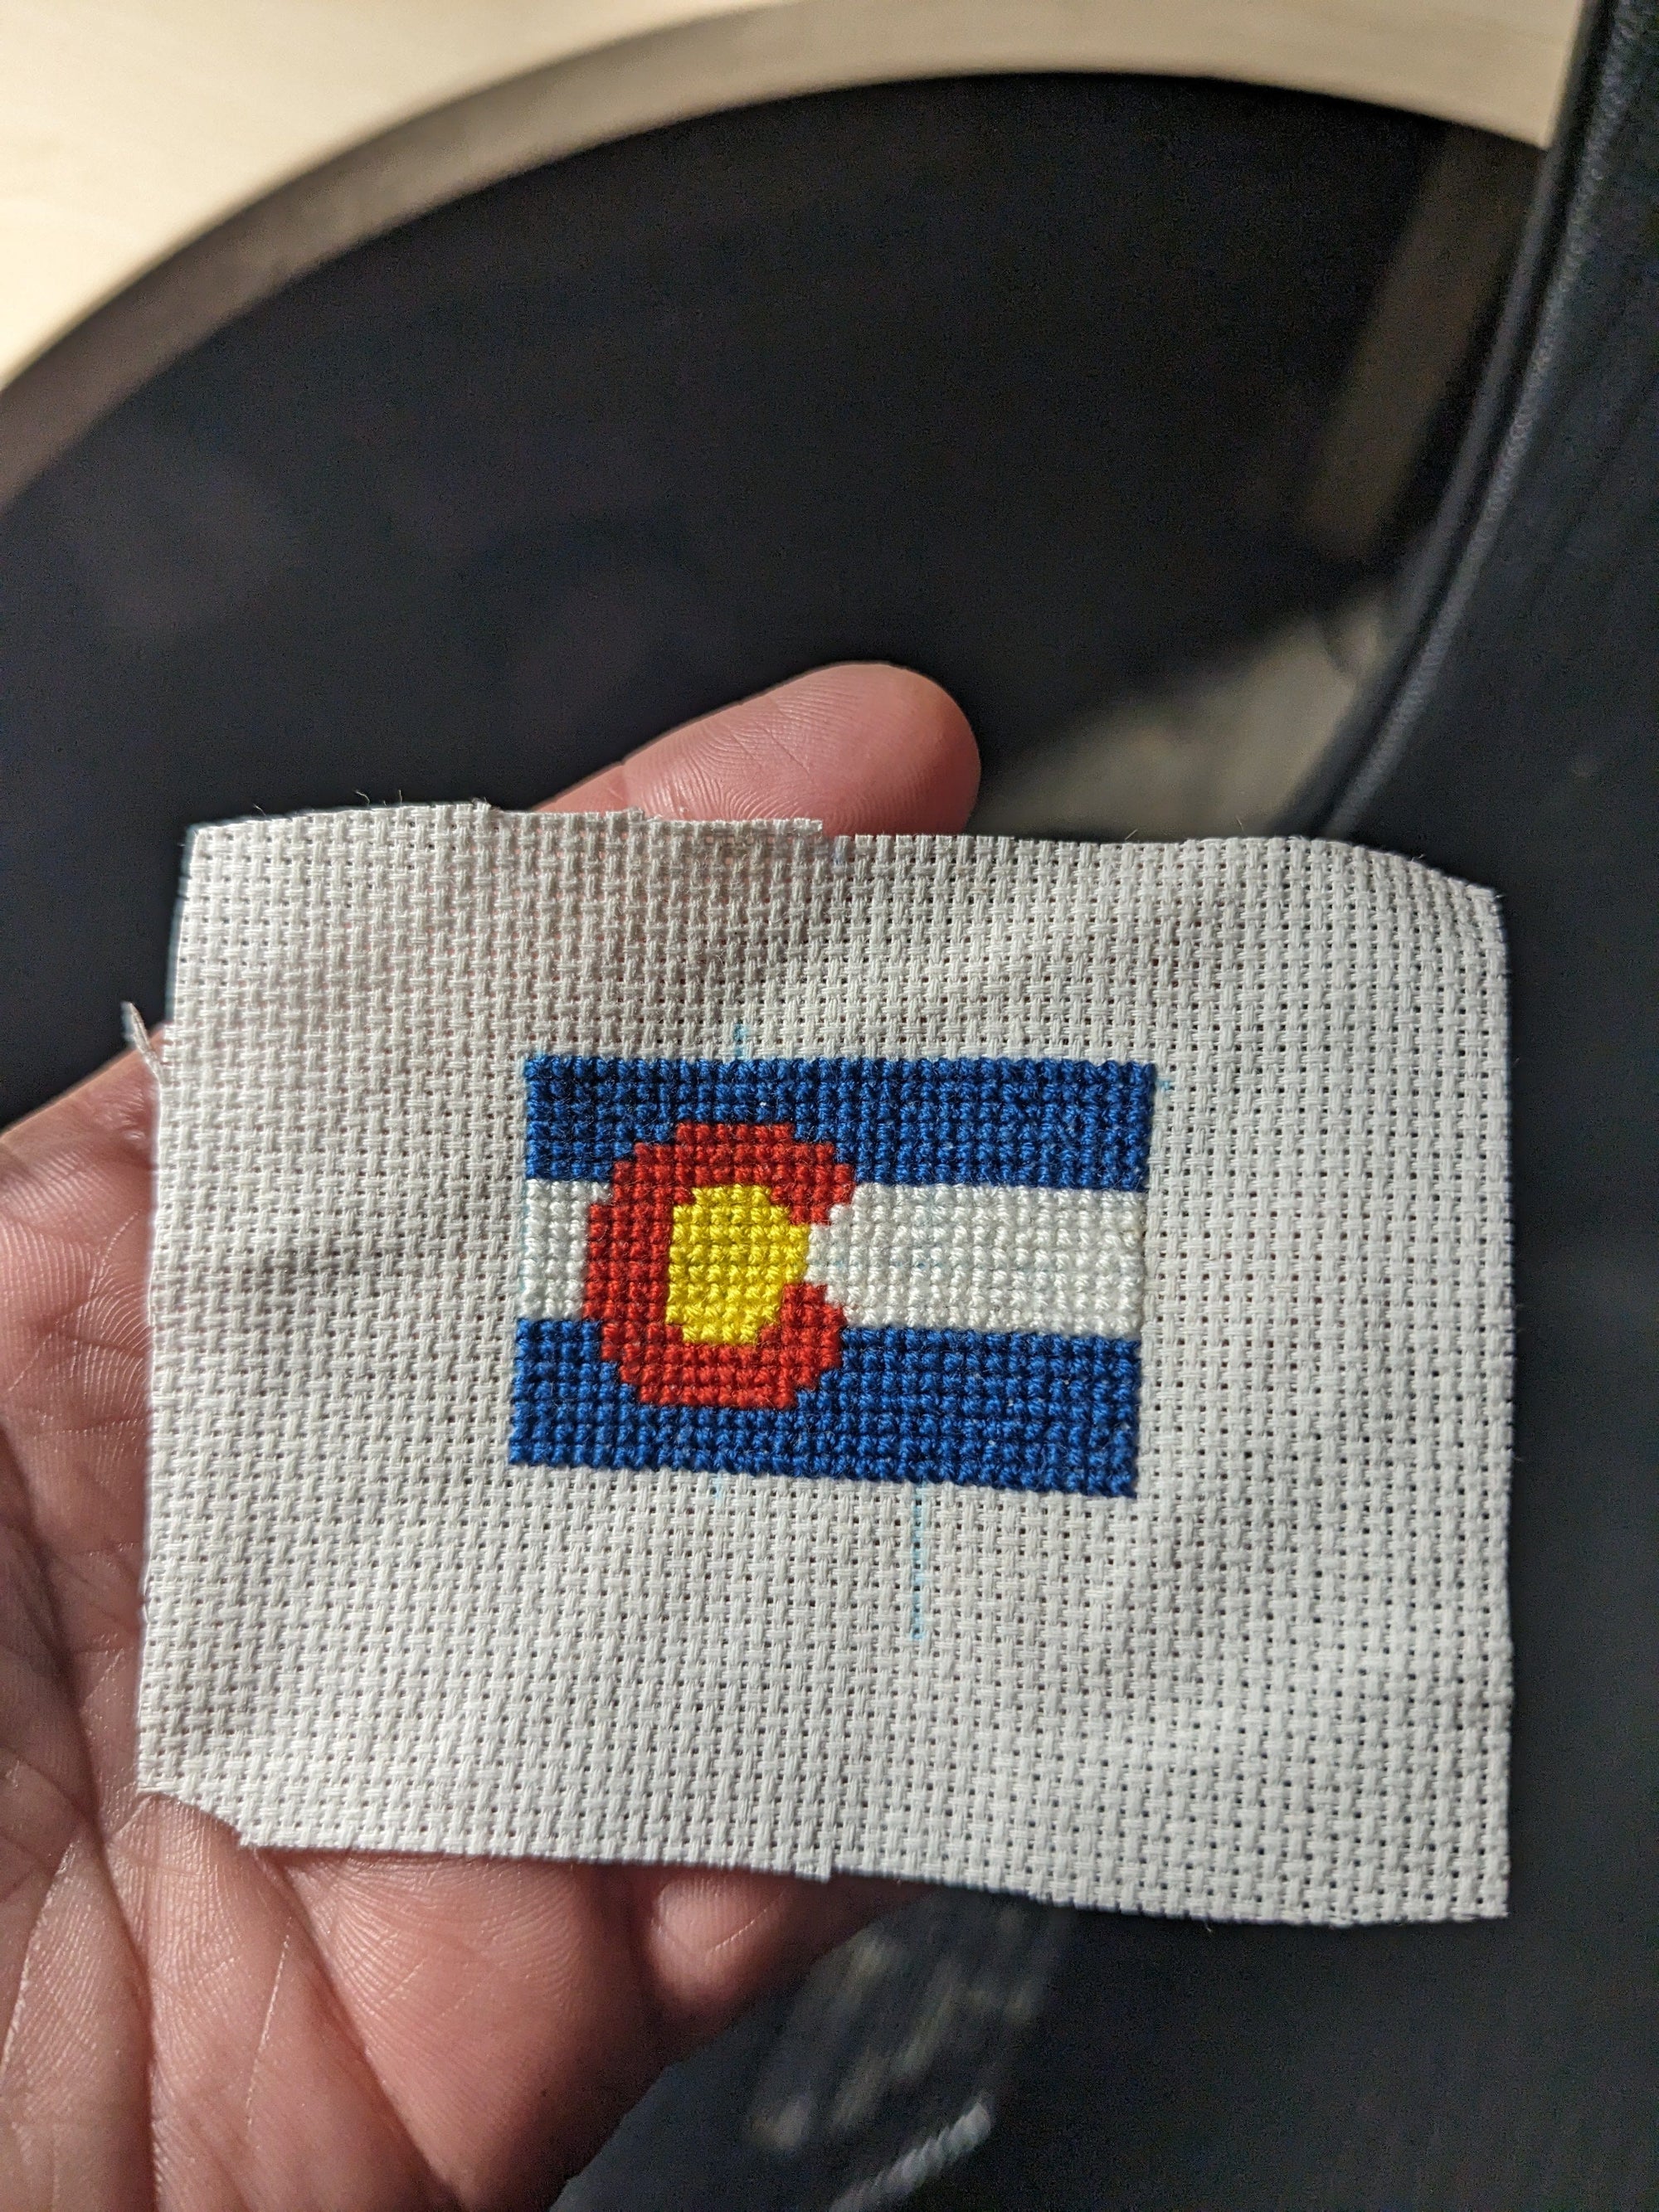 Stitching Jules Design Mini Colorado State Flag Cross Stitch Pattern Instant PDF Download